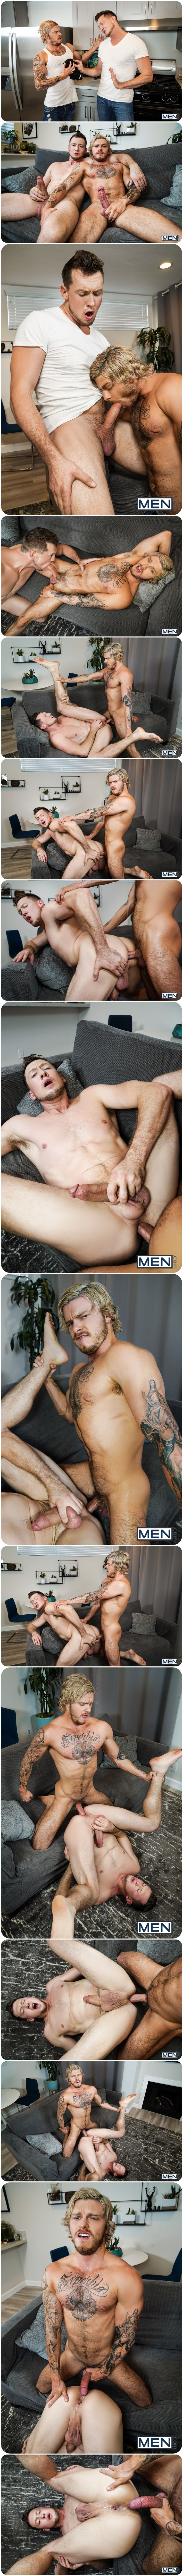 Men.com, Drill My Hole, Pierce Paris, Blake Ryder